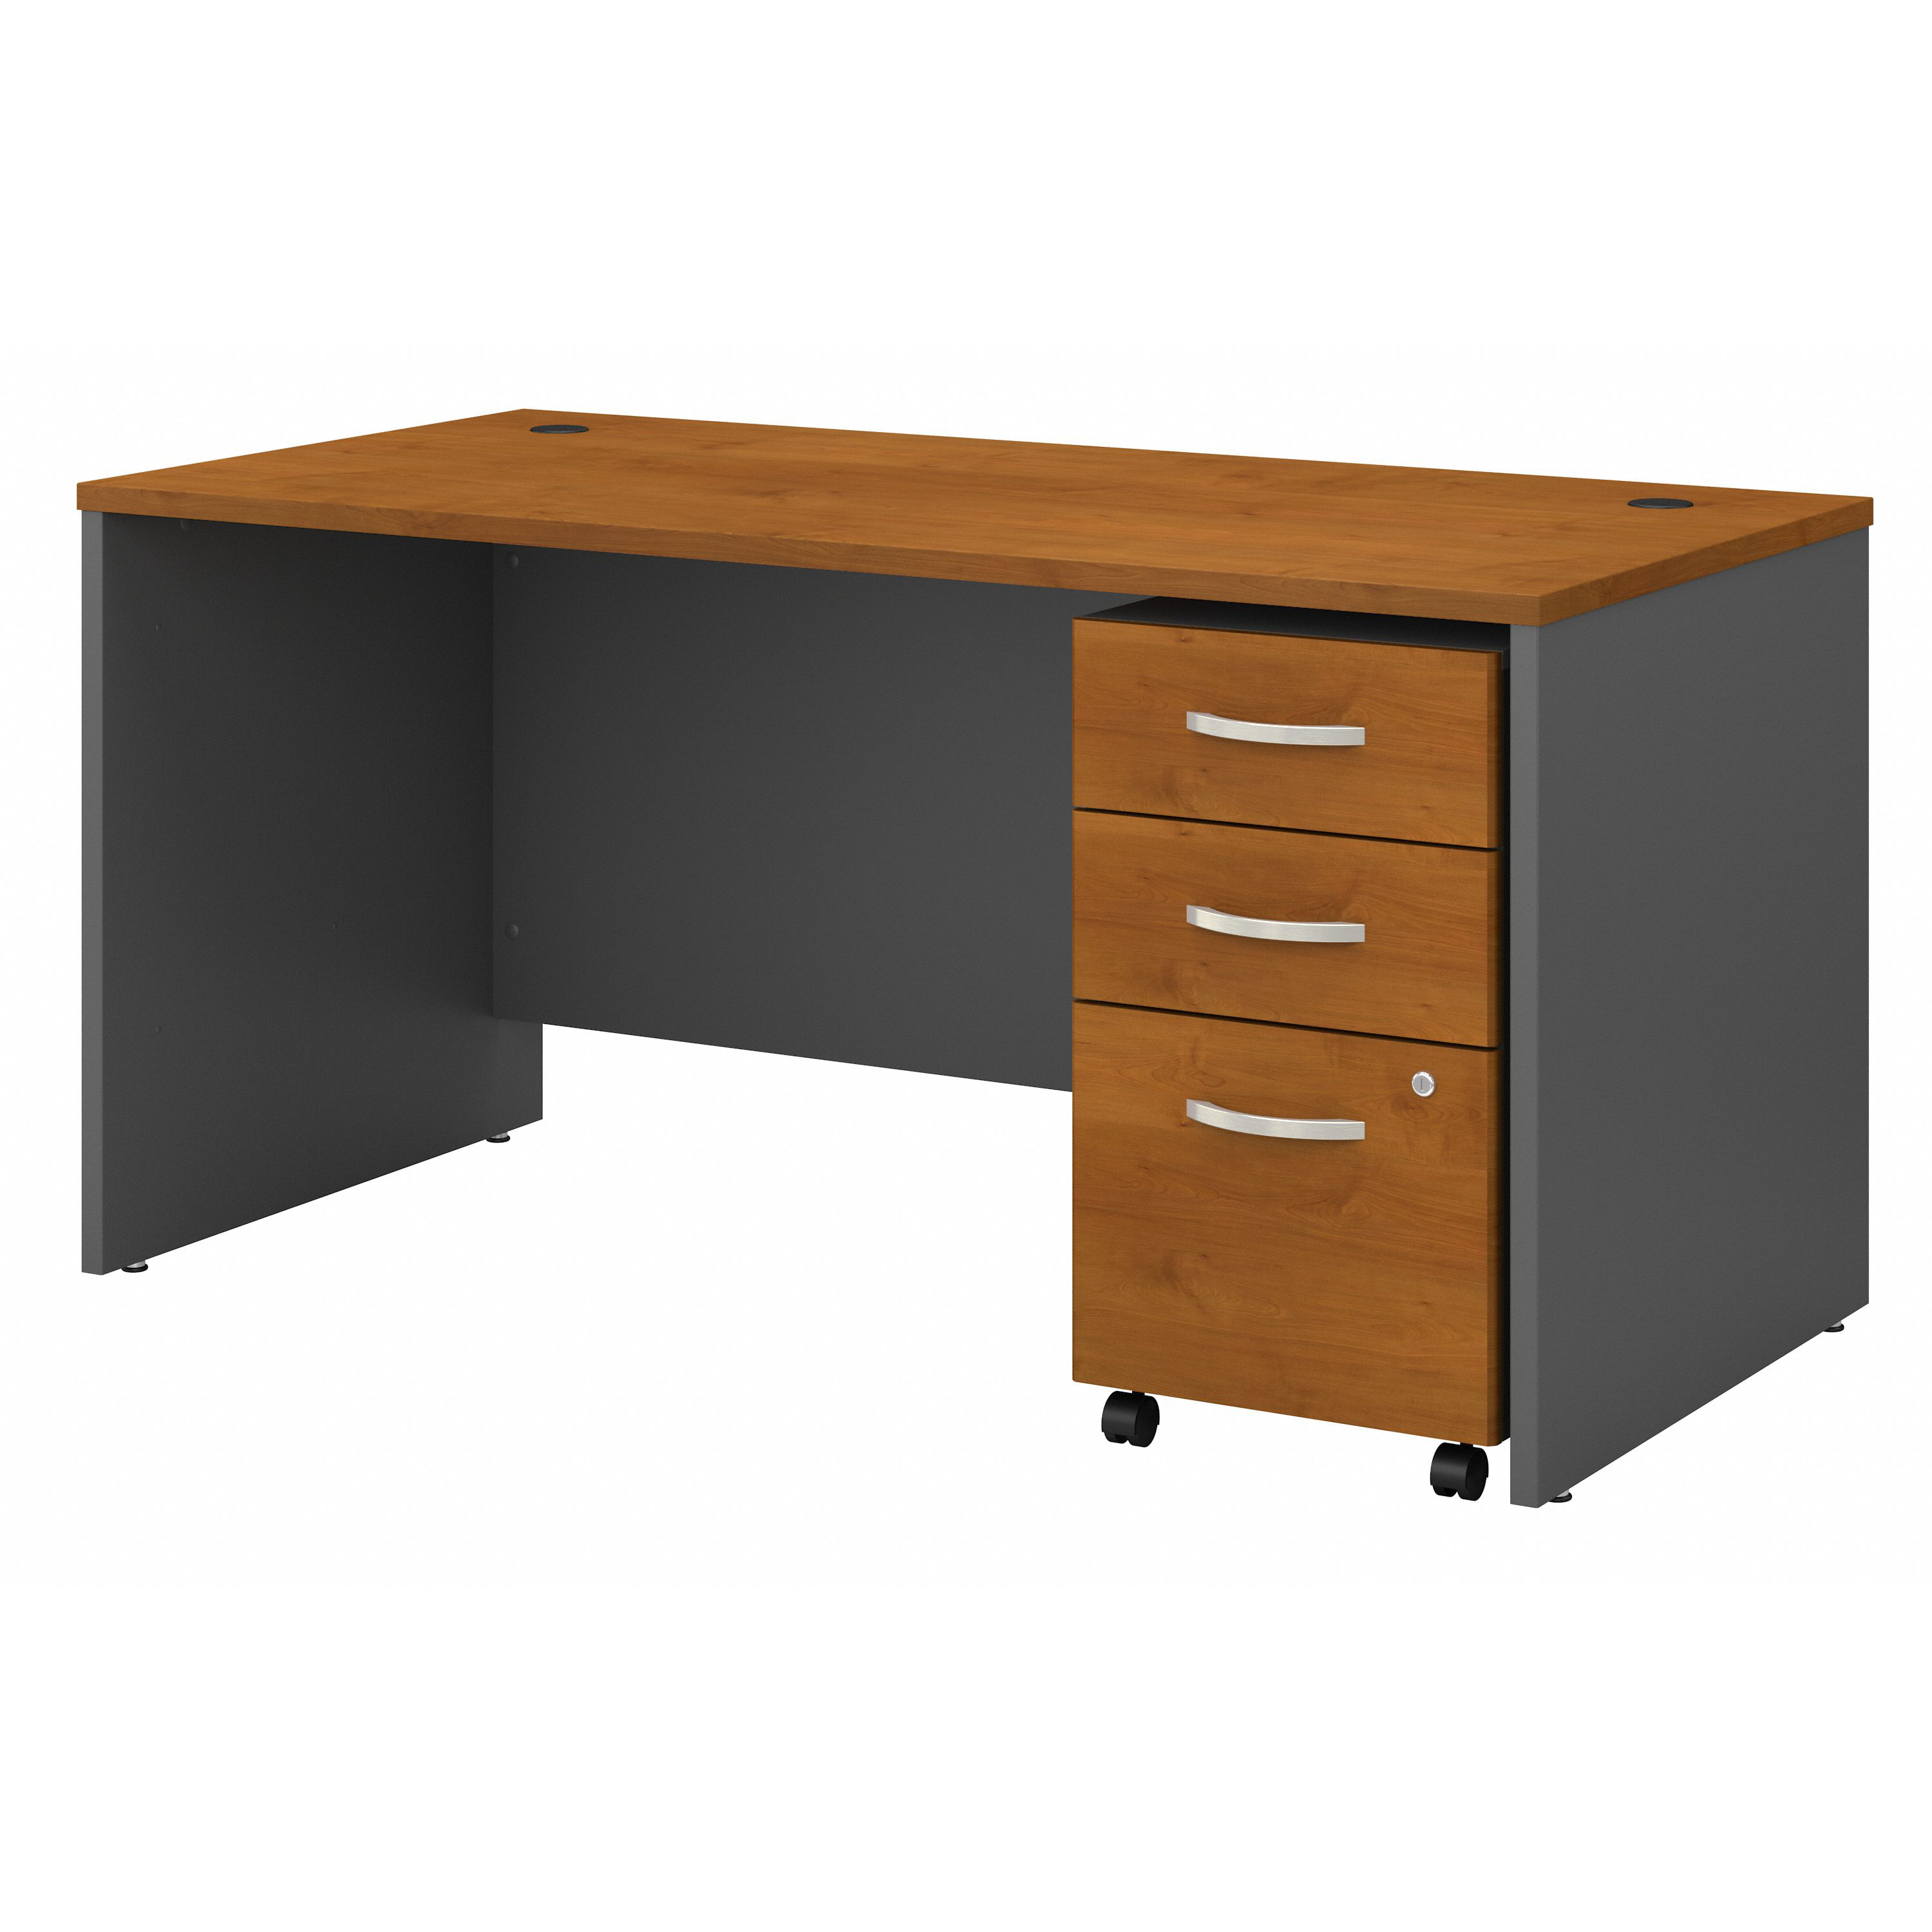 Shop Bush Business Furniture Series C 60W x 30D Office Desk with 3 Drawer Mobile File Cabinet 02 SRC144NCSU #color_natural cherry/graphite gray